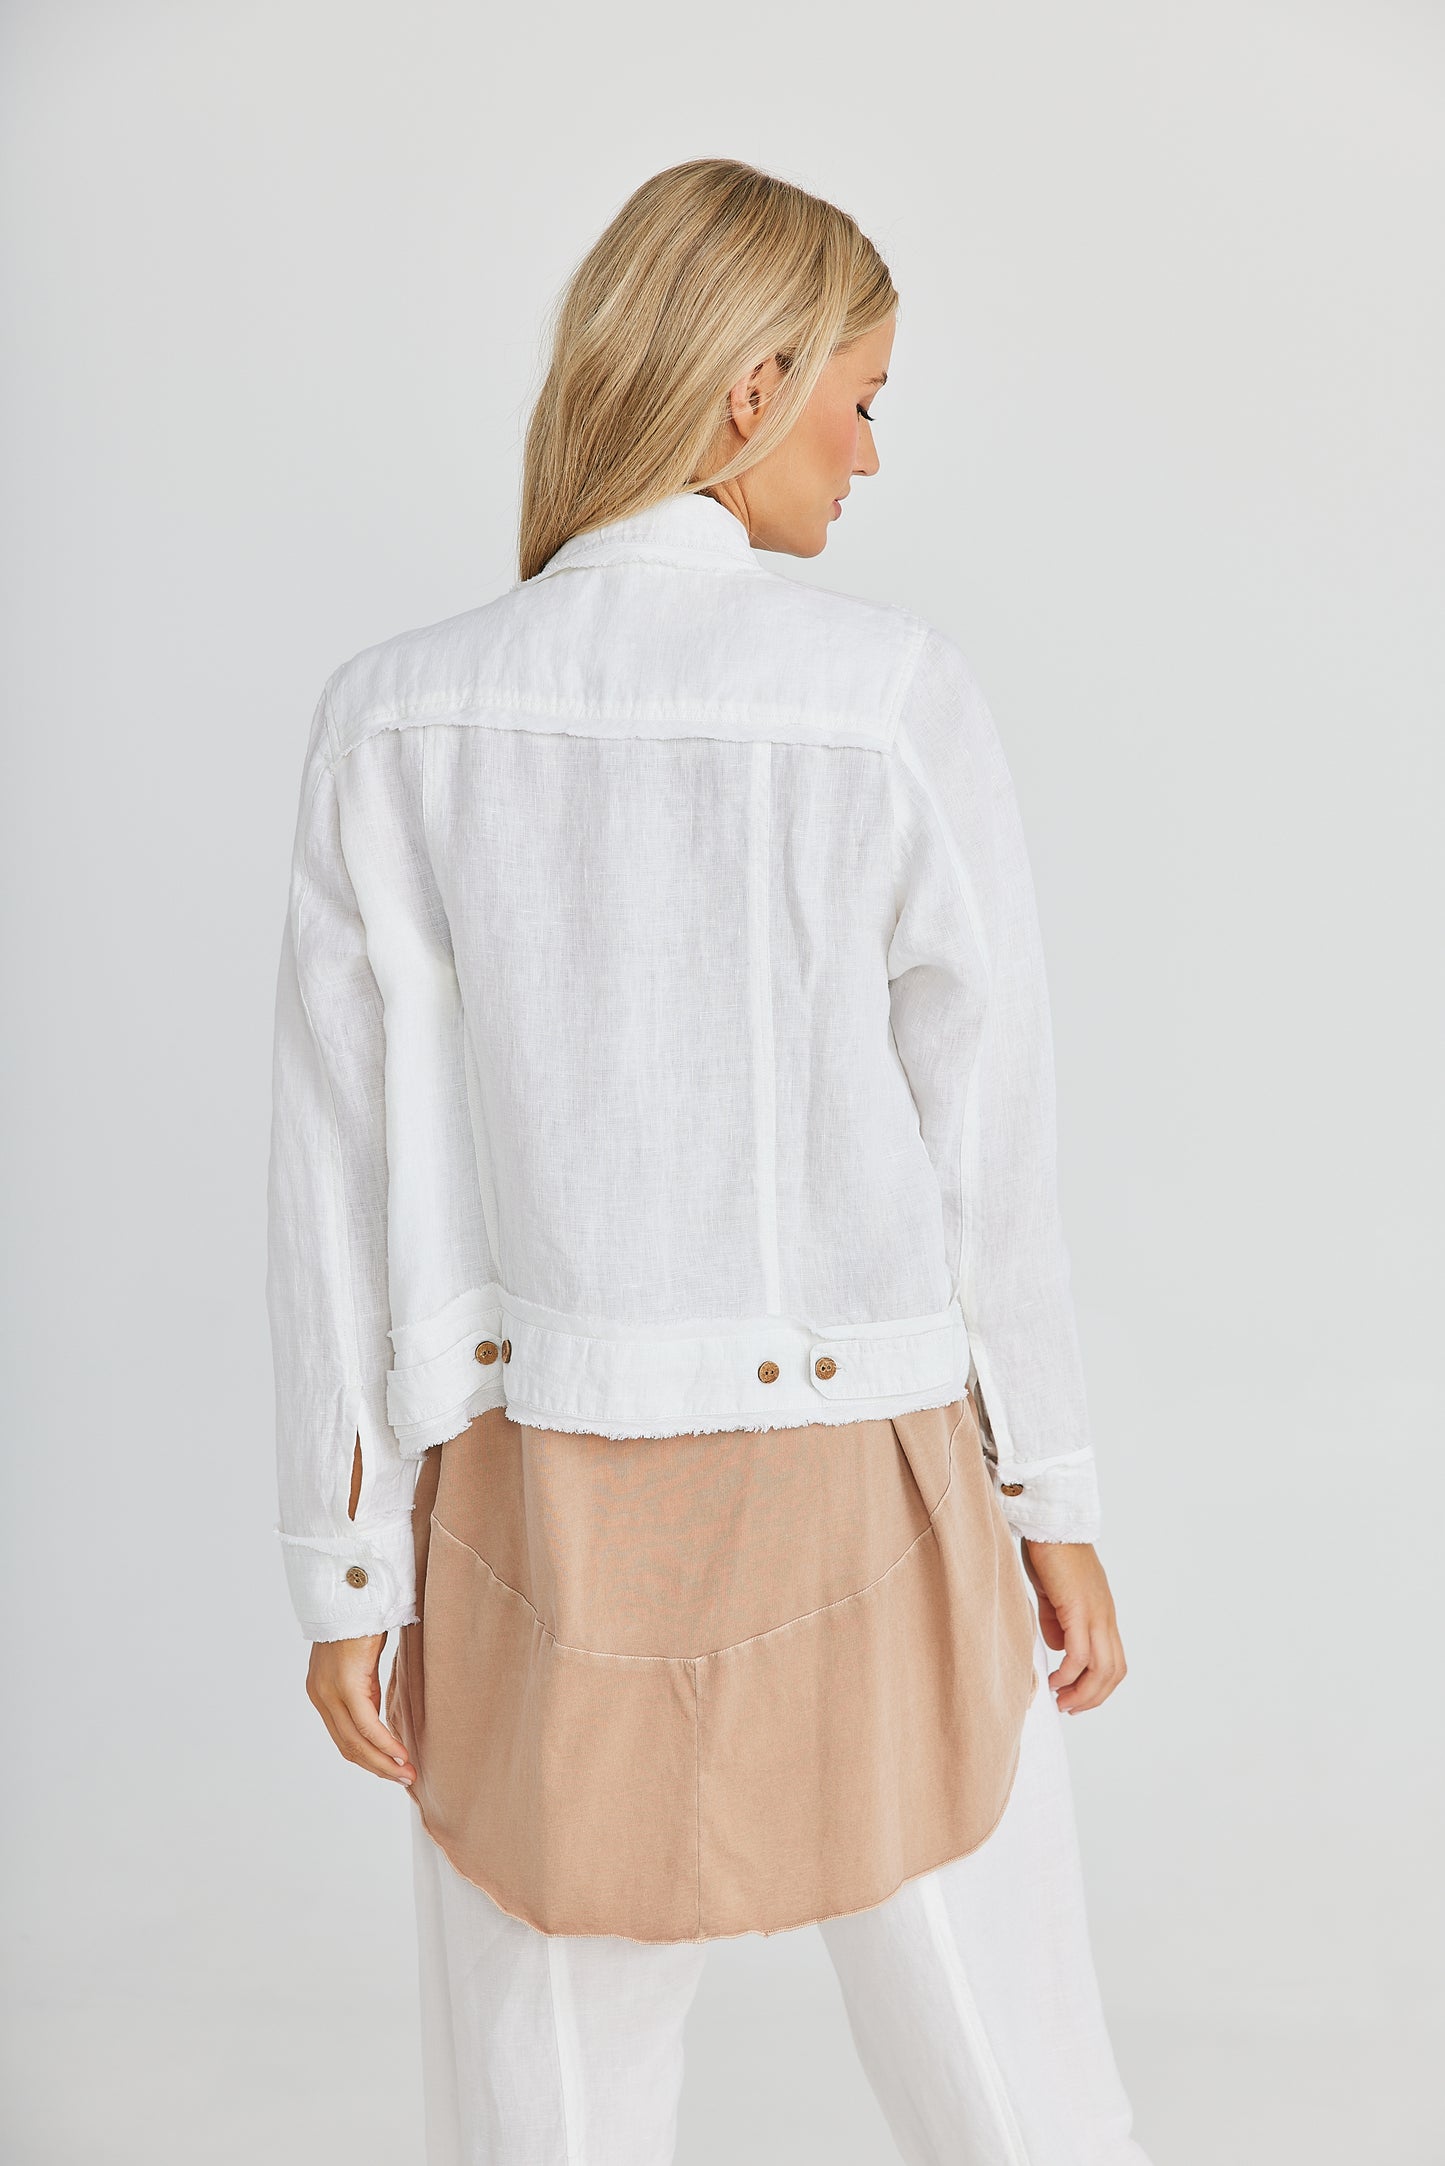 The Shanty Monza Jacket - White Linen